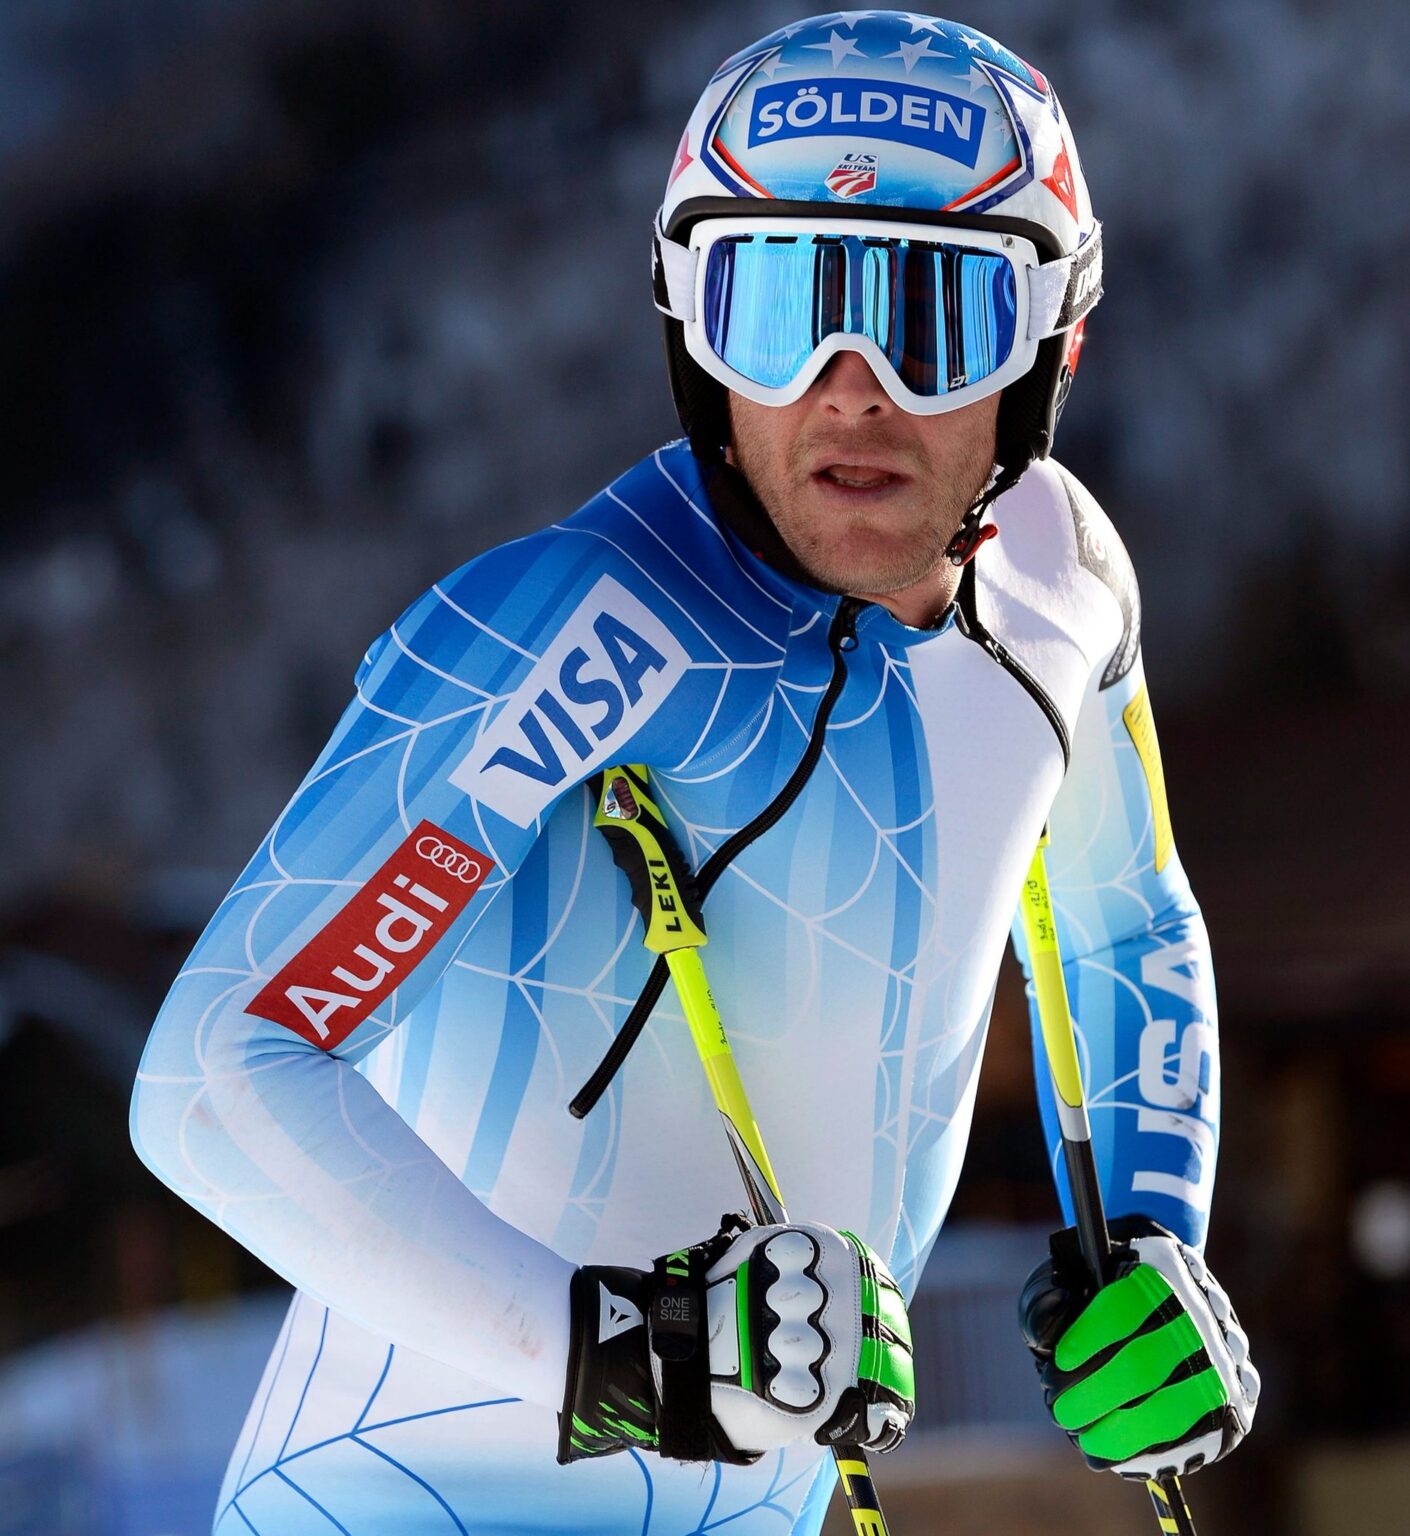 Bode Miller (alpine ski racer)Bio, Wiki, Age, Height, Family, Wife